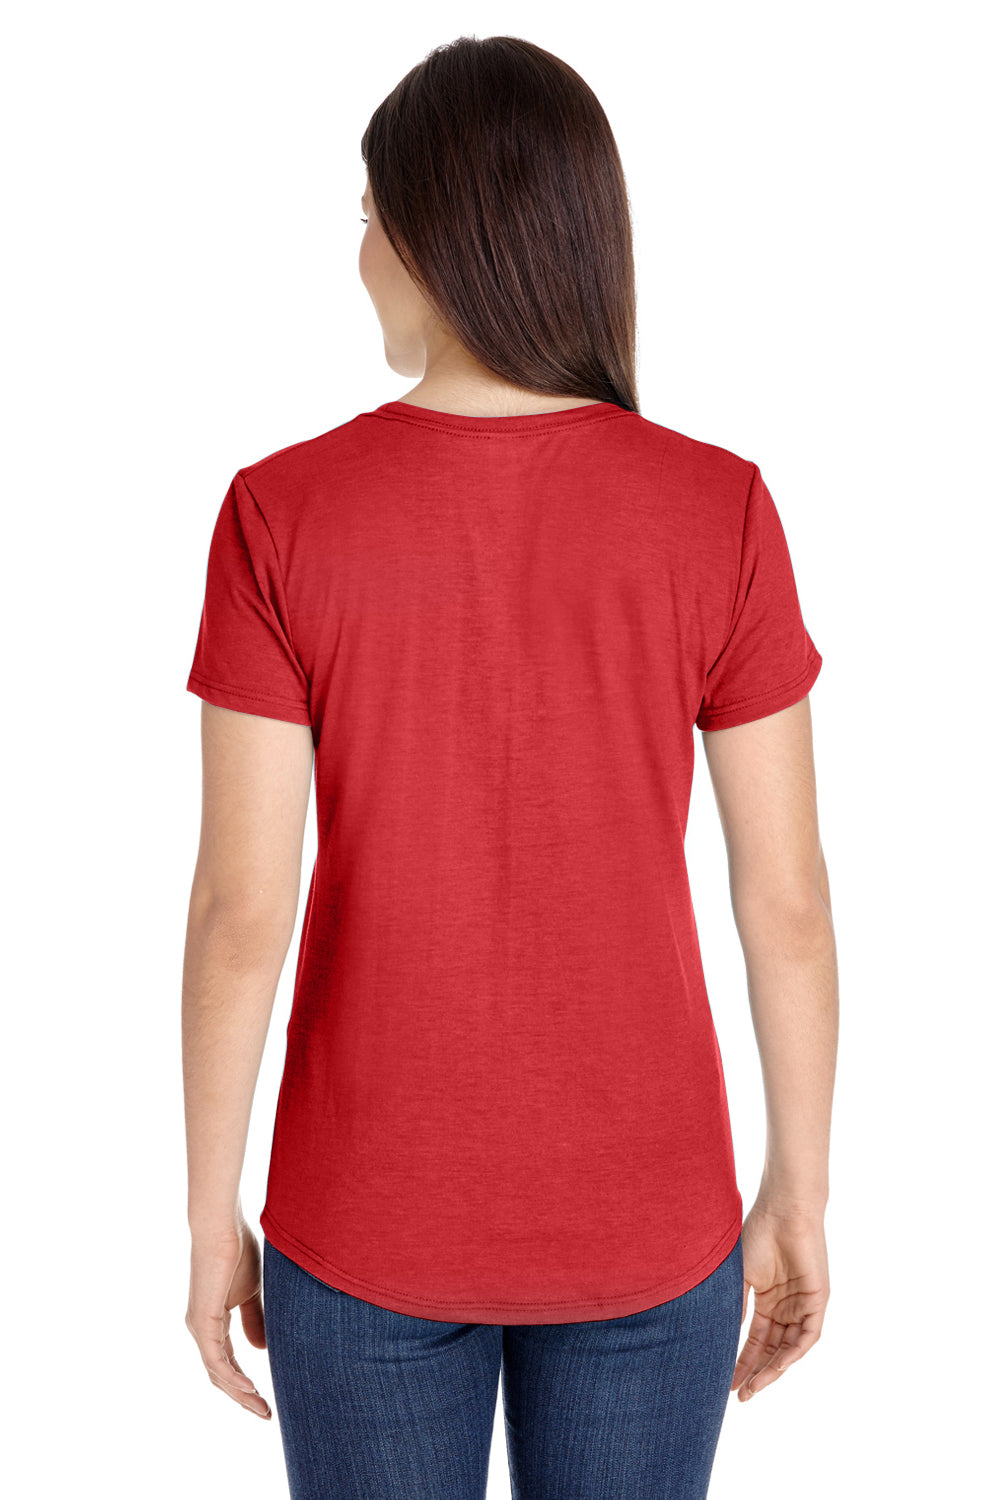 Anvil 6750L Womens Short Sleeve Crewneck T-Shirt Heather Red Back